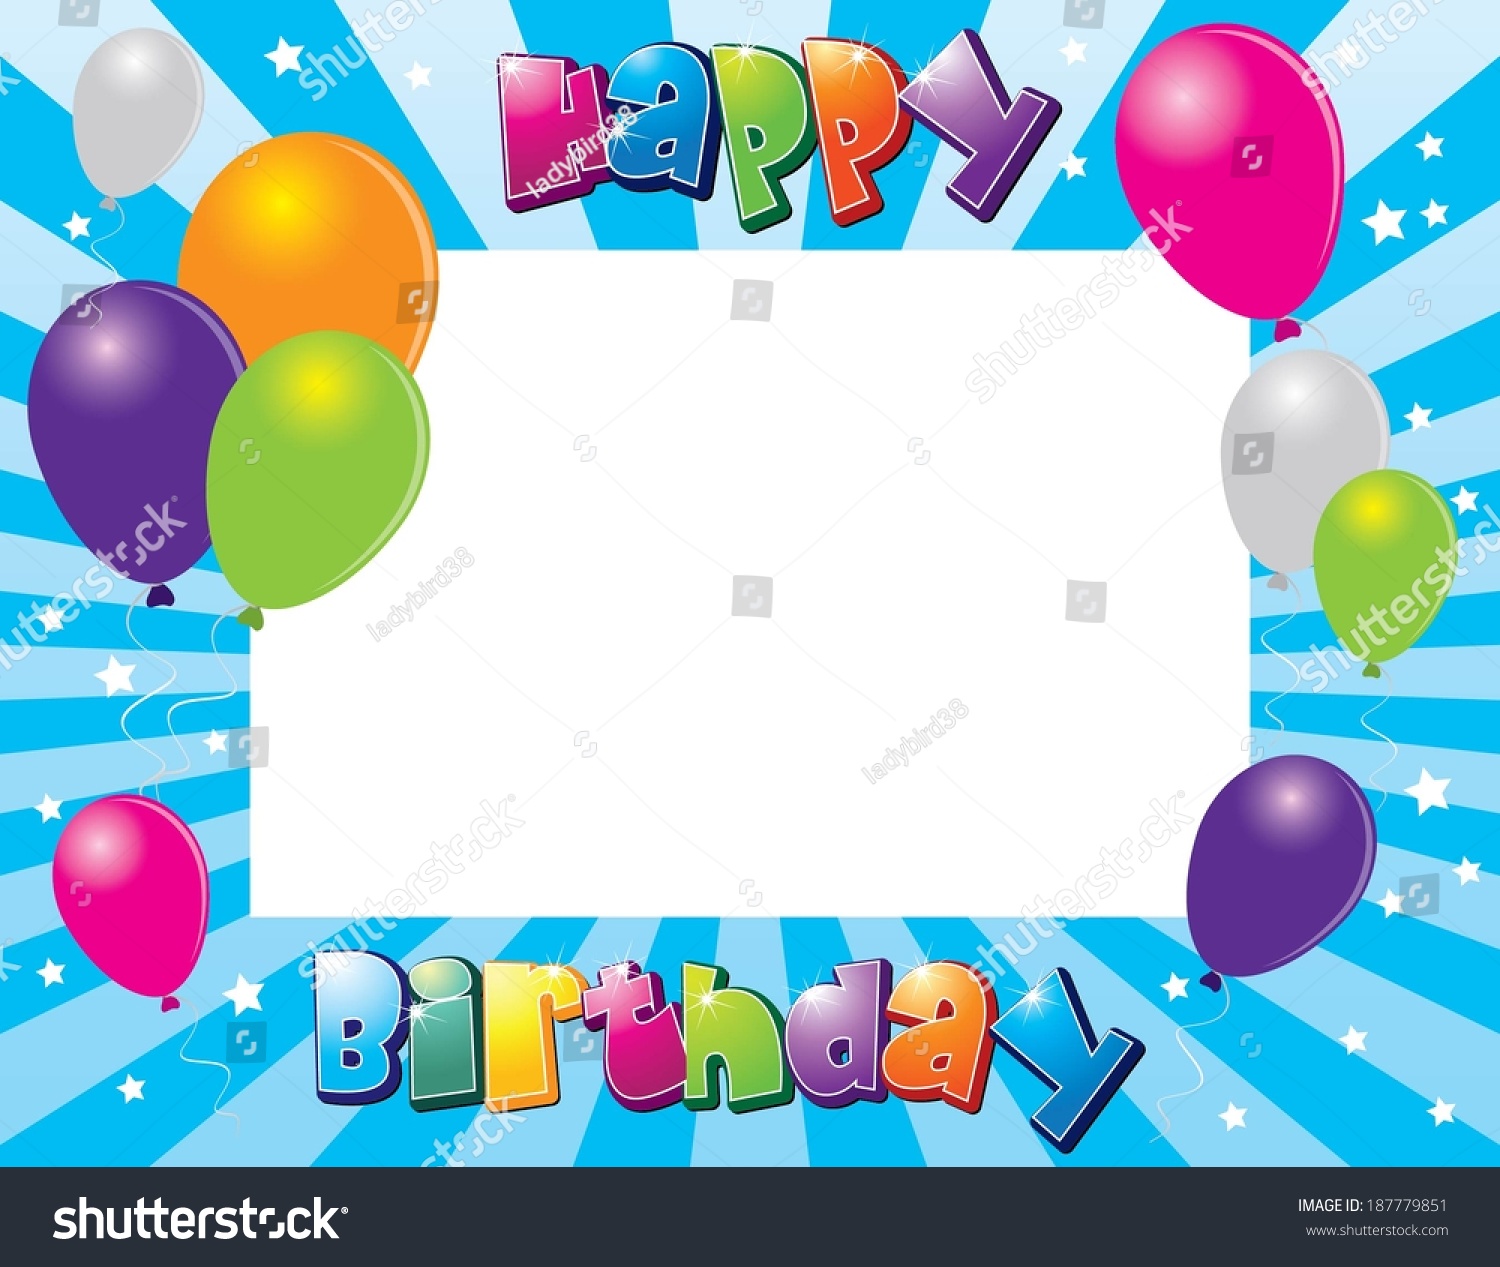 Happy Birthday Photo Frame Vector Illustration - 187779851 : Shutterstock